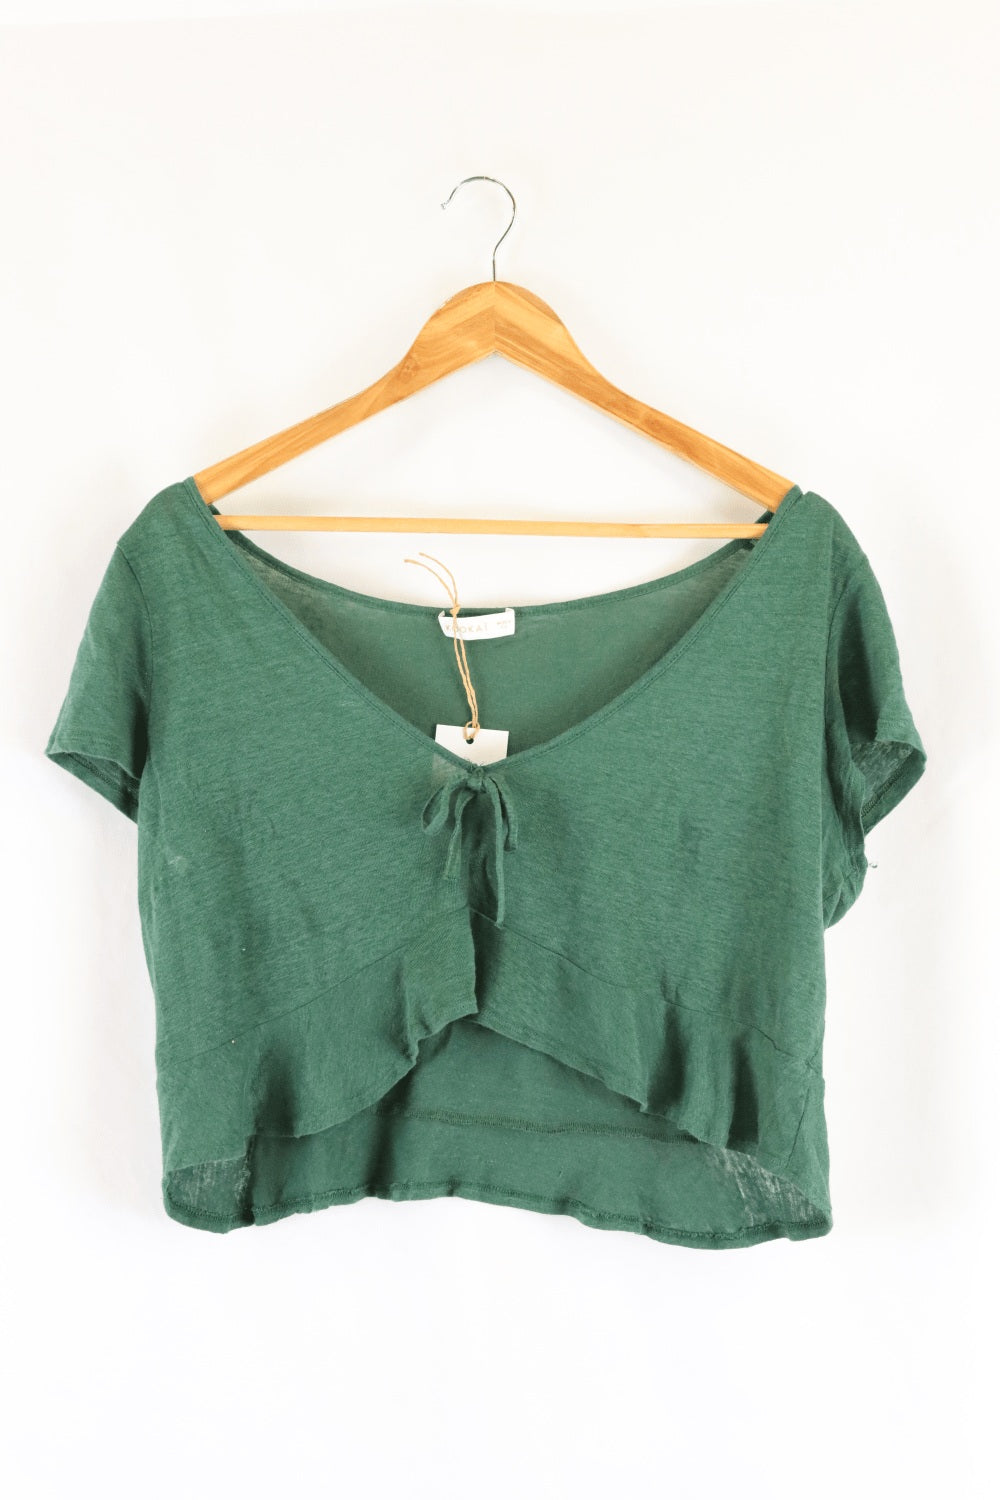 Kookai Green Cropped Top L - Reluv Clothing Australia